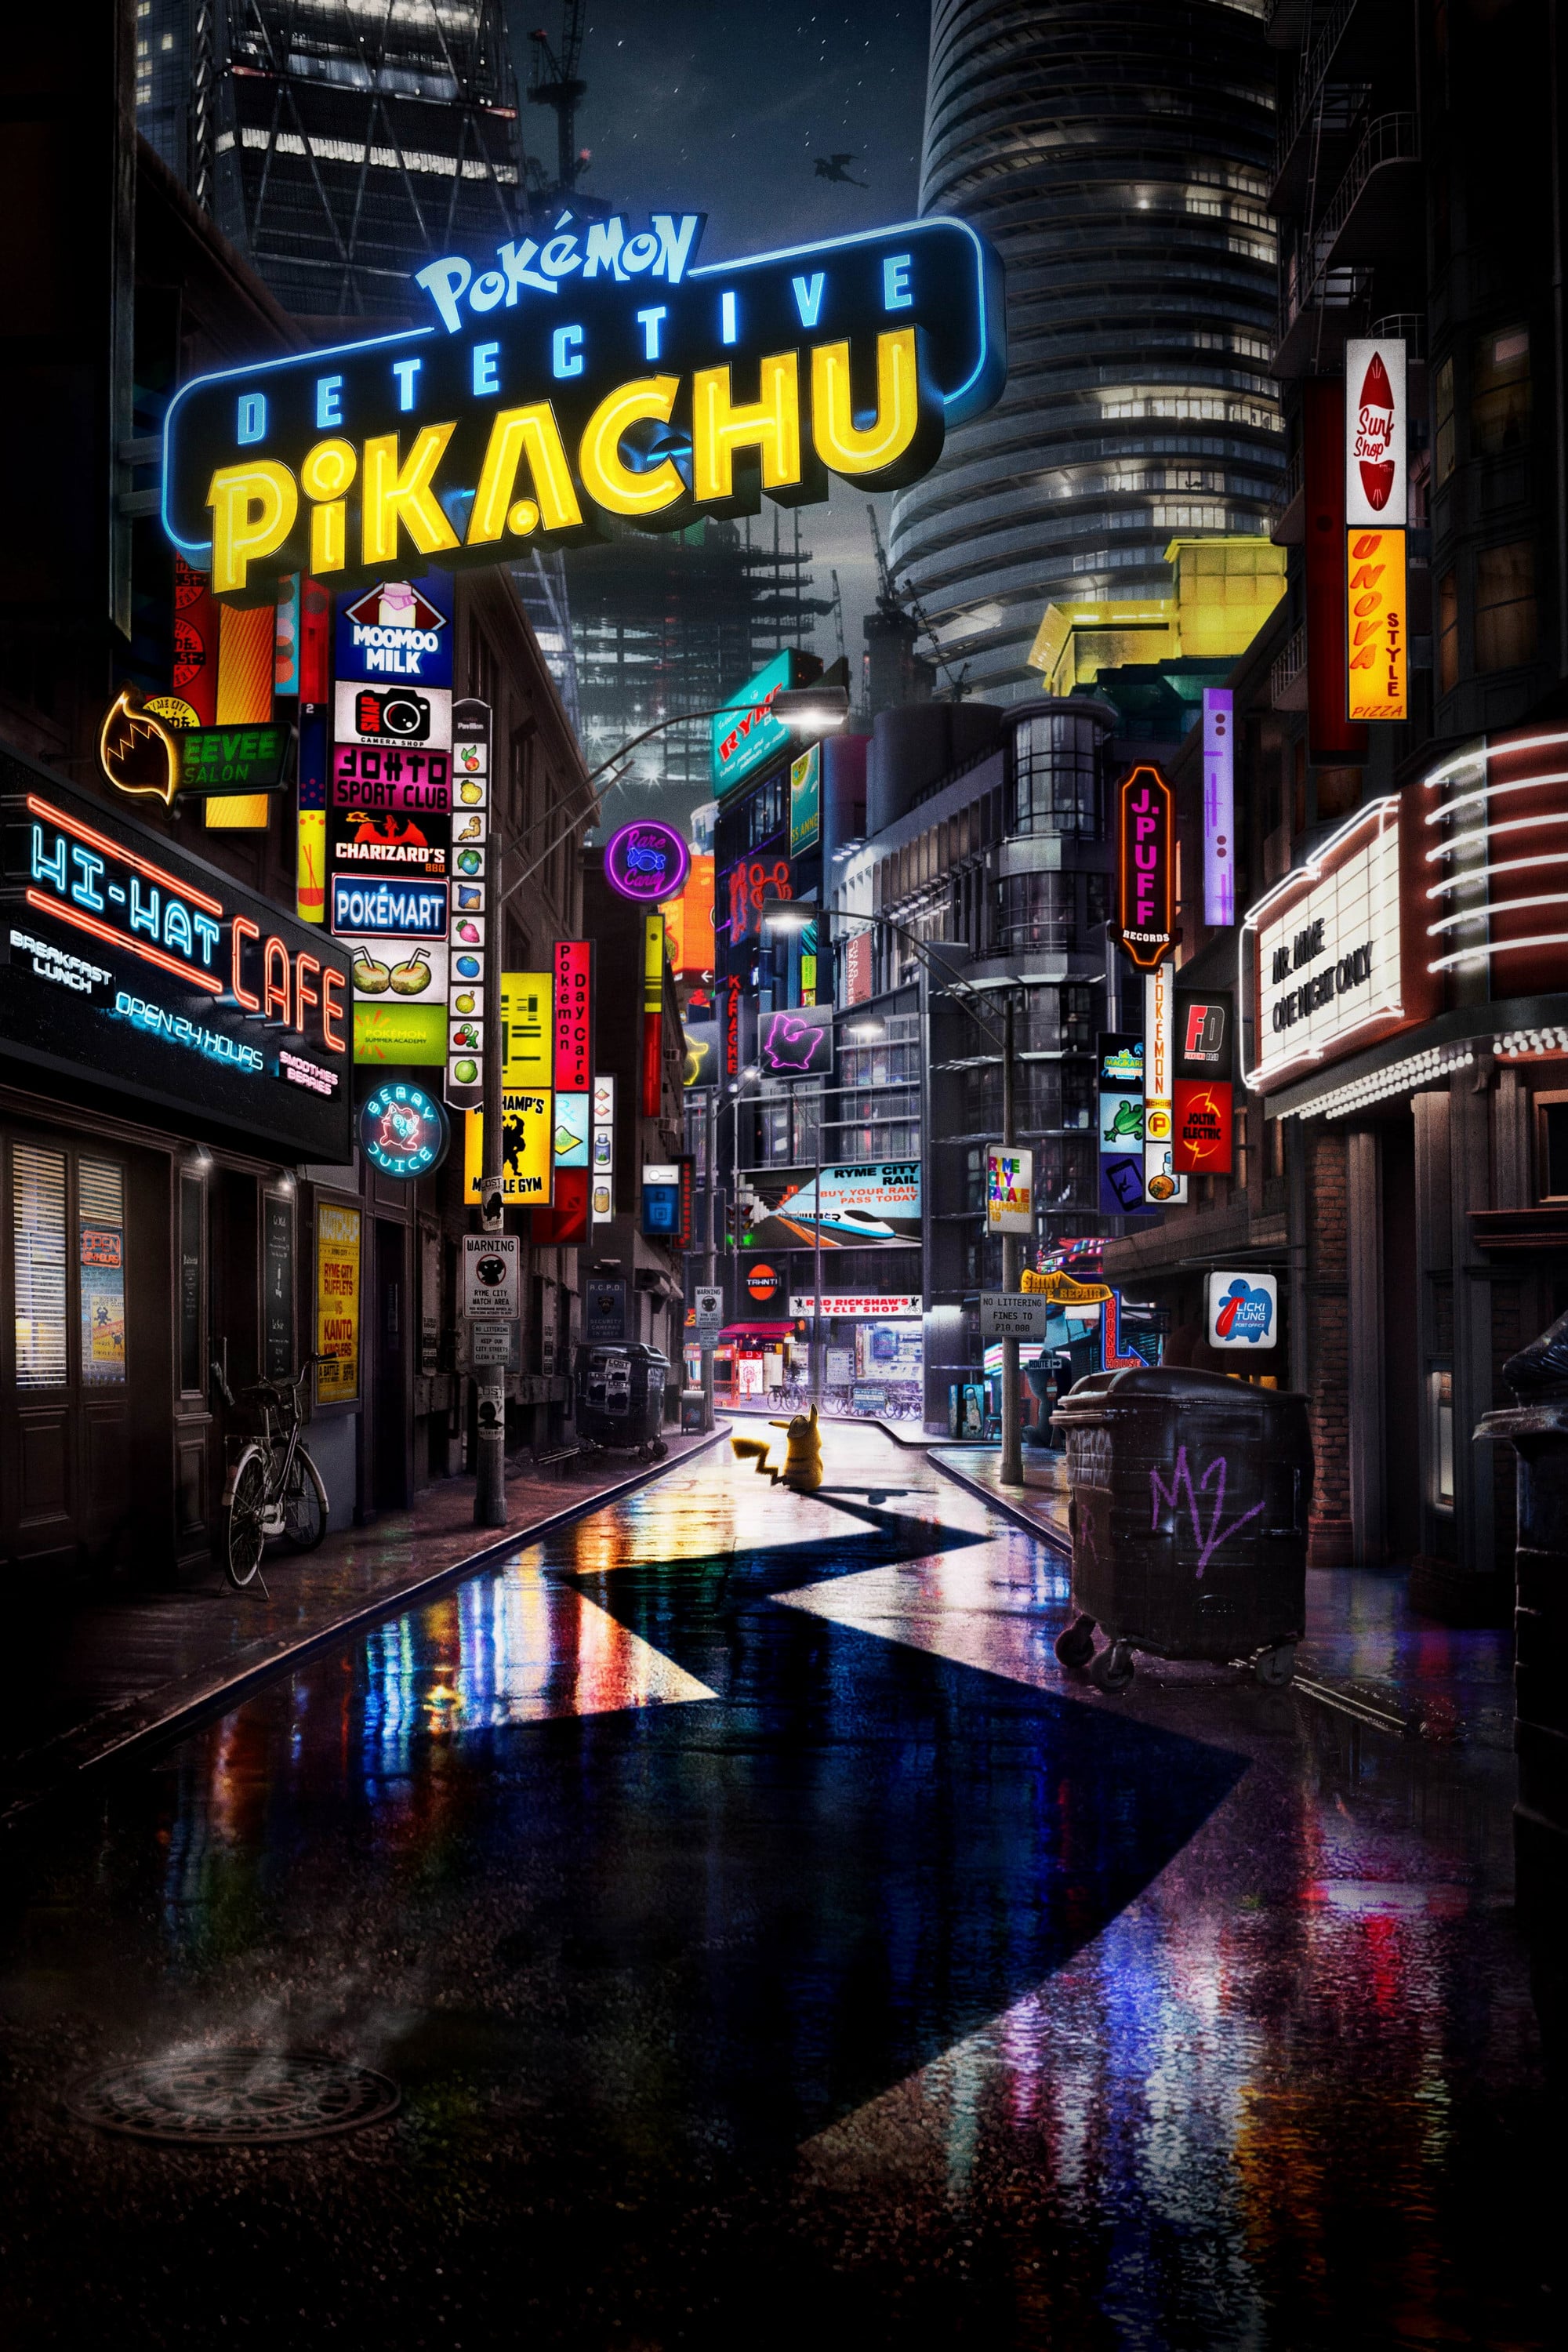 Poster for the movie "Pokémon: Detective Pikachu"